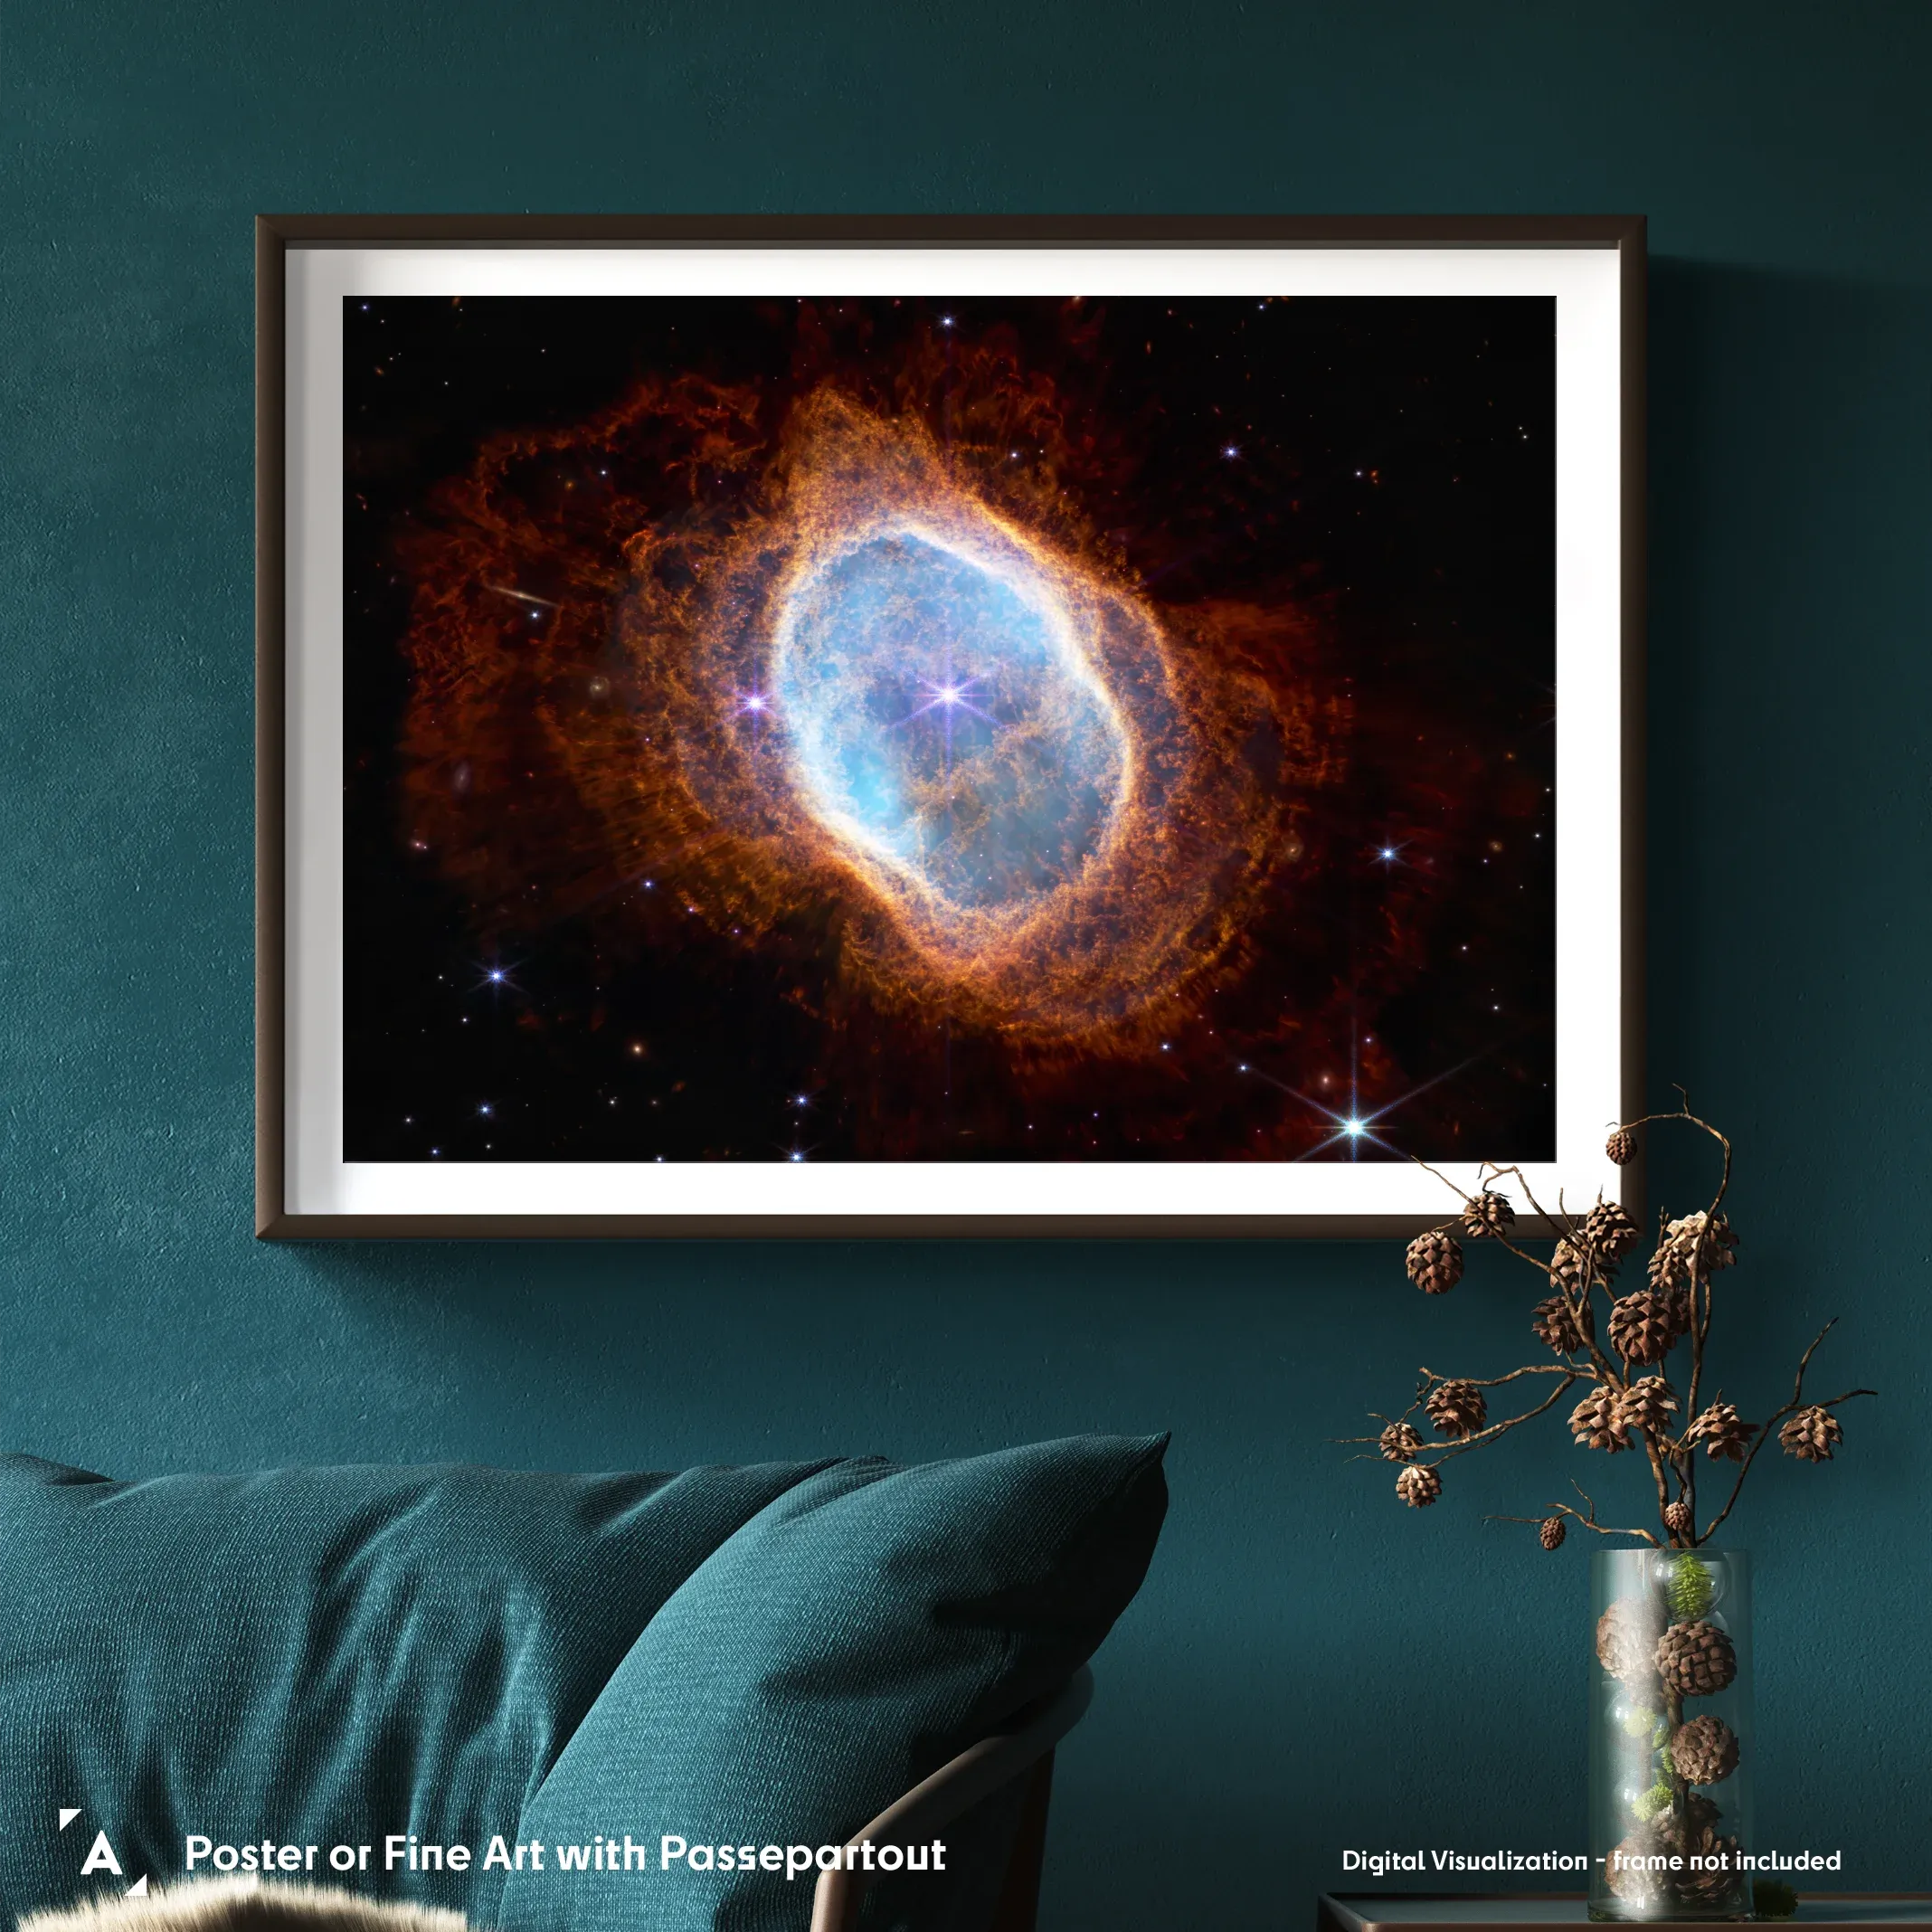 James Webb Space Telescope captures the striking beauty of Ring Nebula